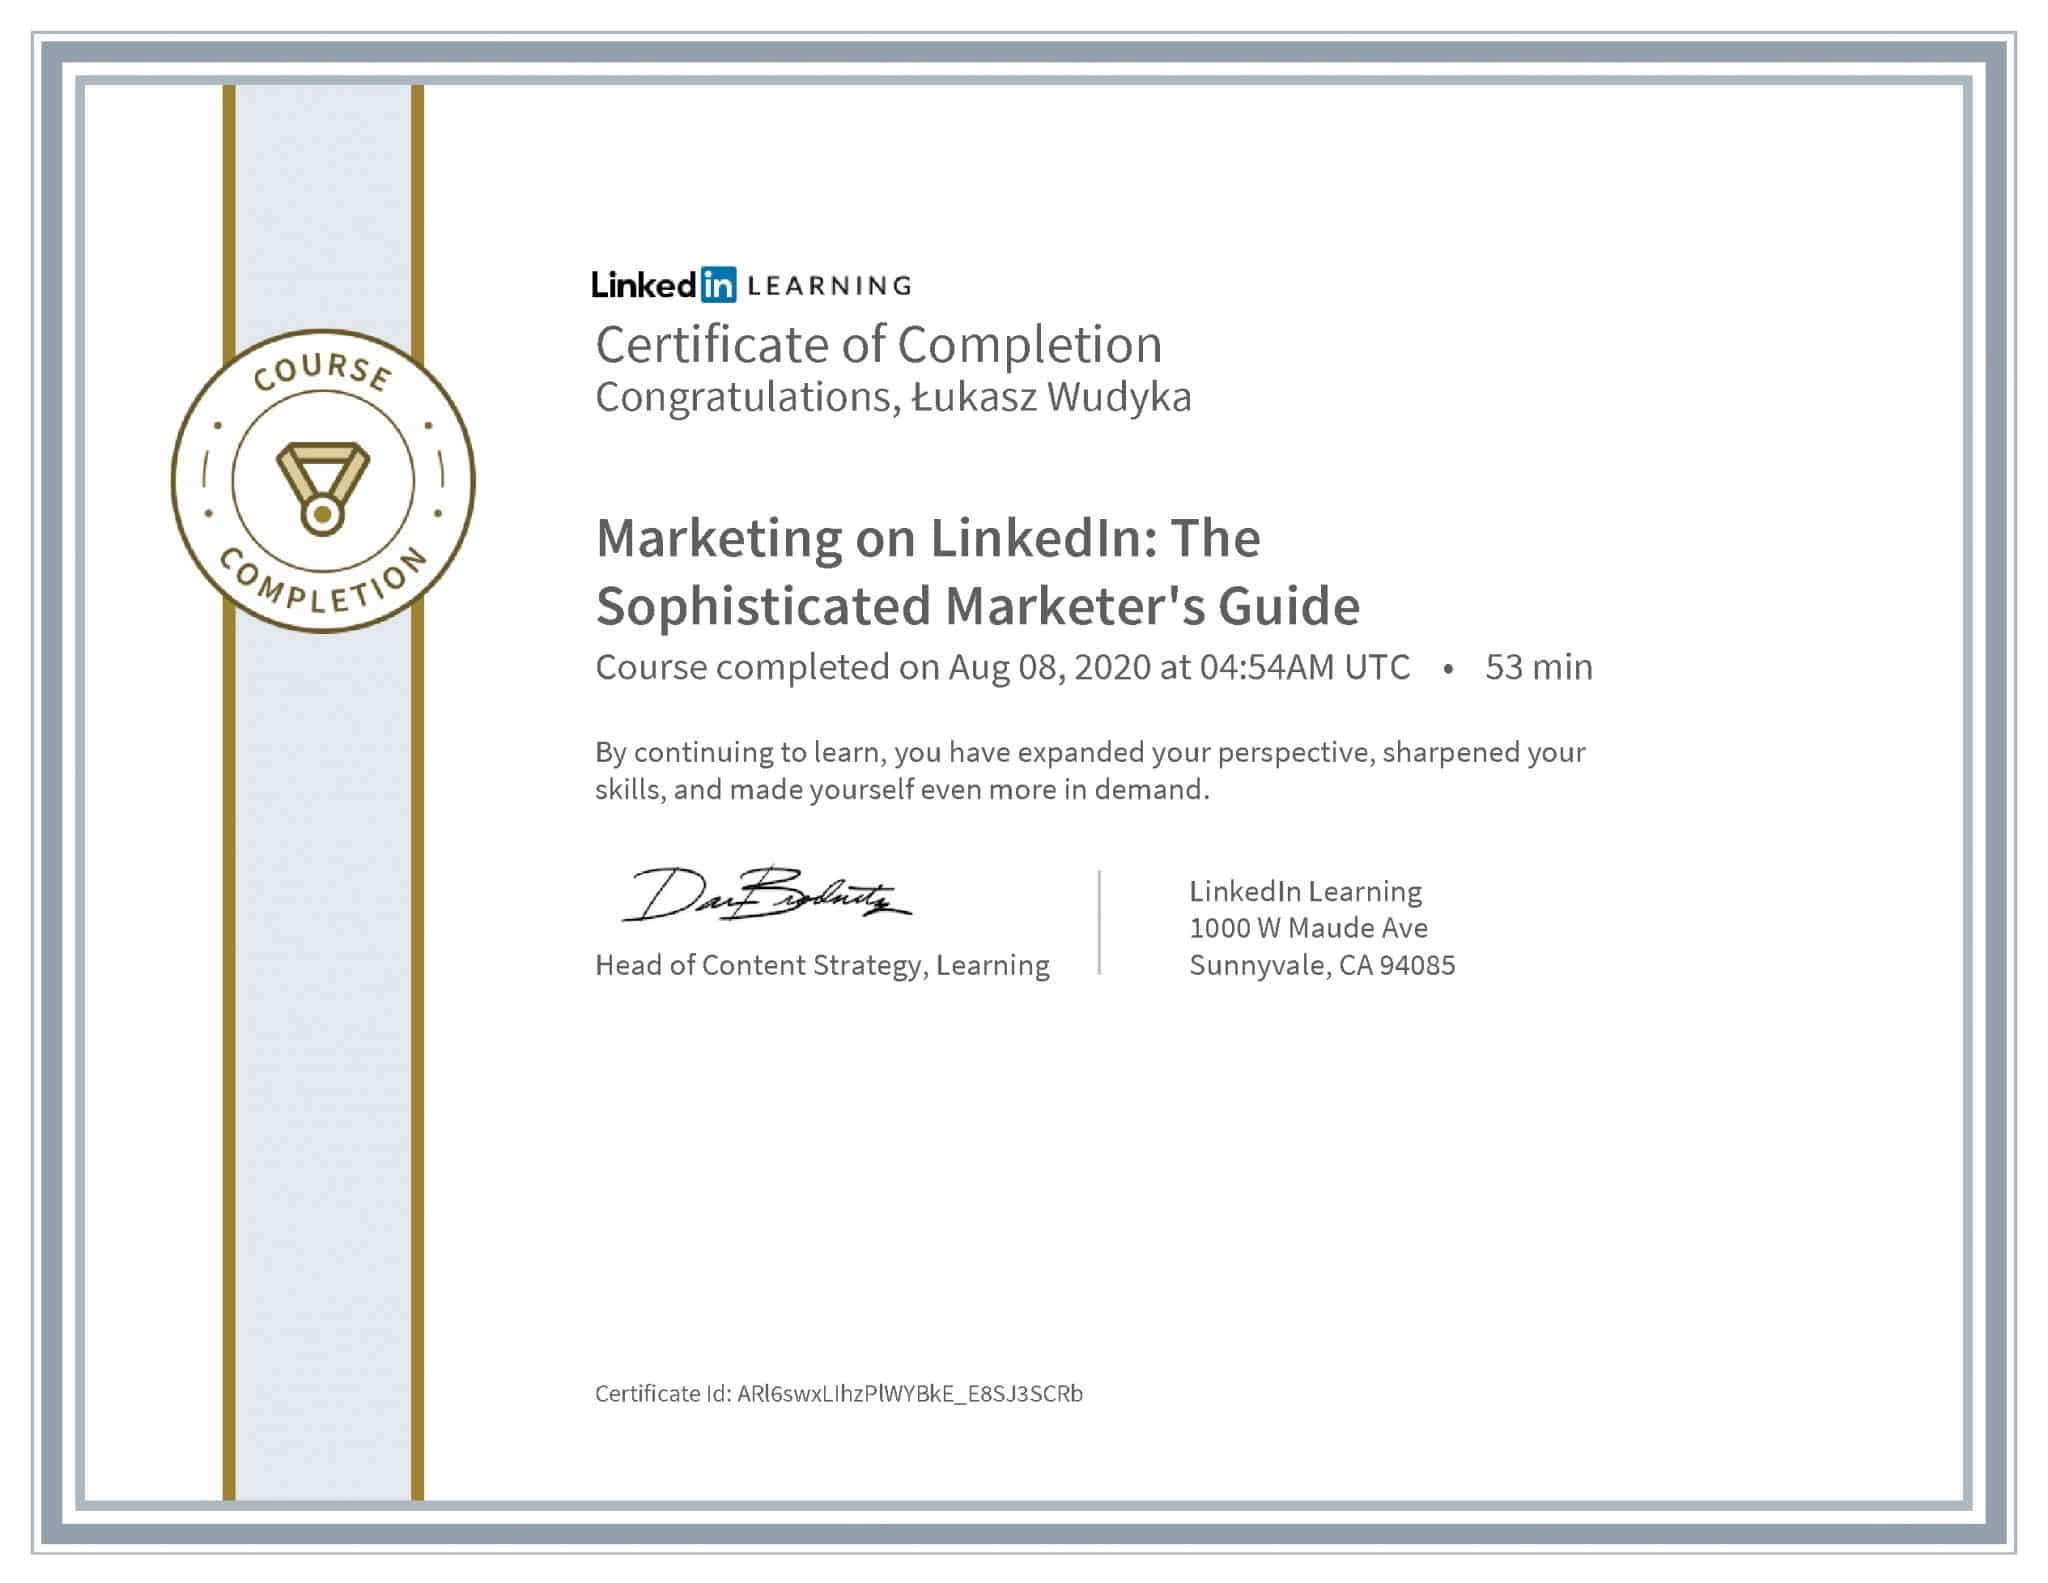 Łukasz Wudyka certyfikat LinkedIn Marketing on LinkedIn: The Sophisticated Marketer's Guide